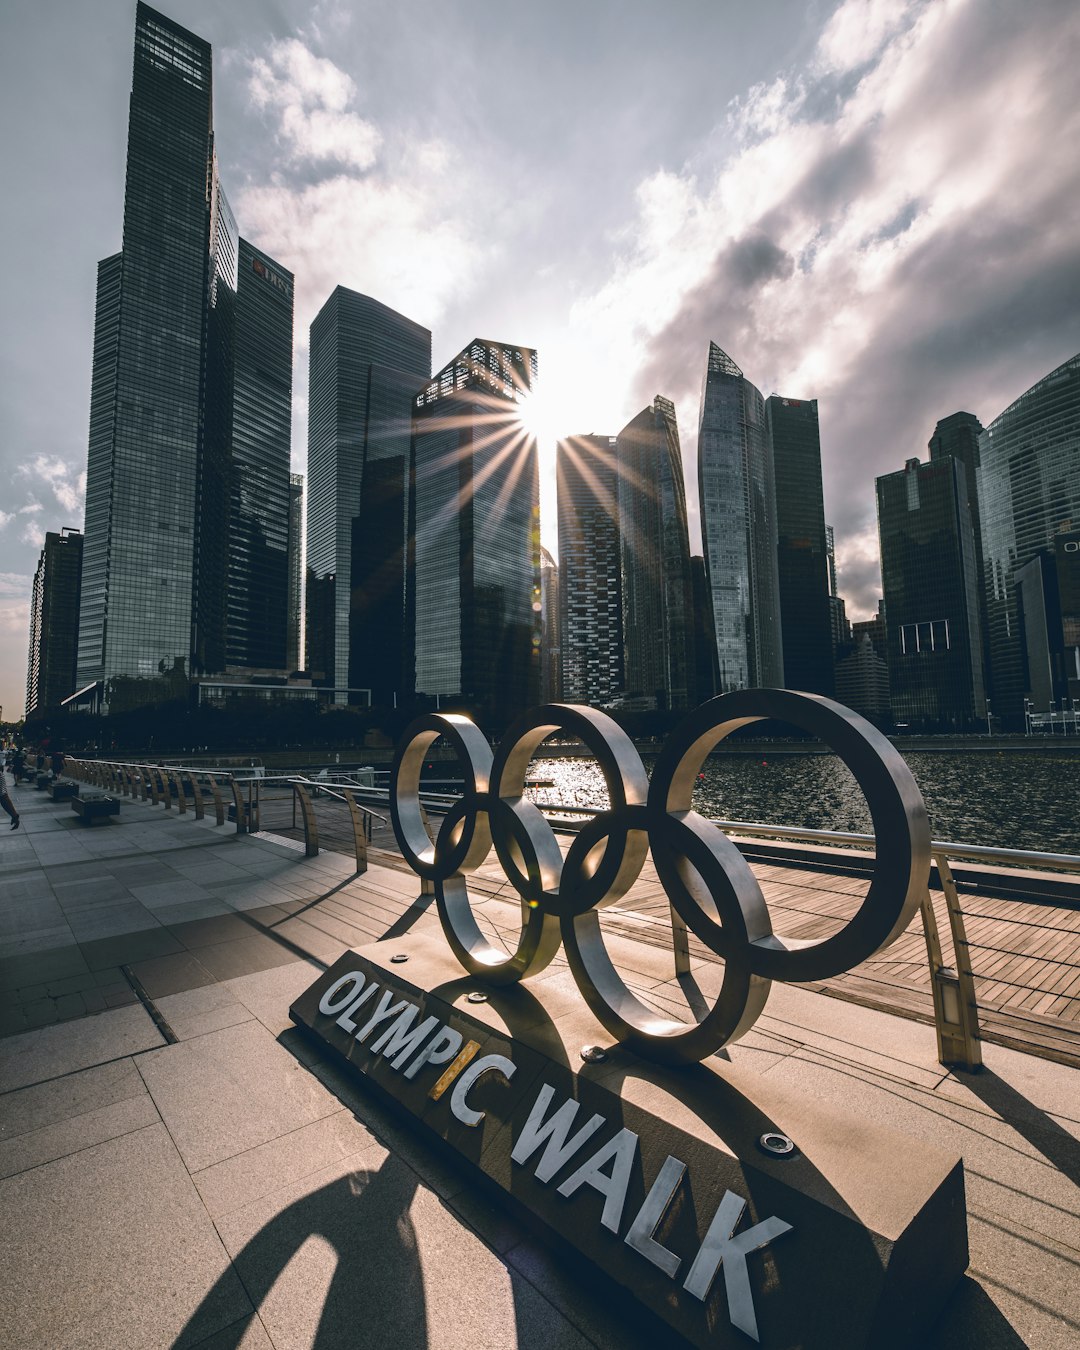 olympic walk signage near body of water